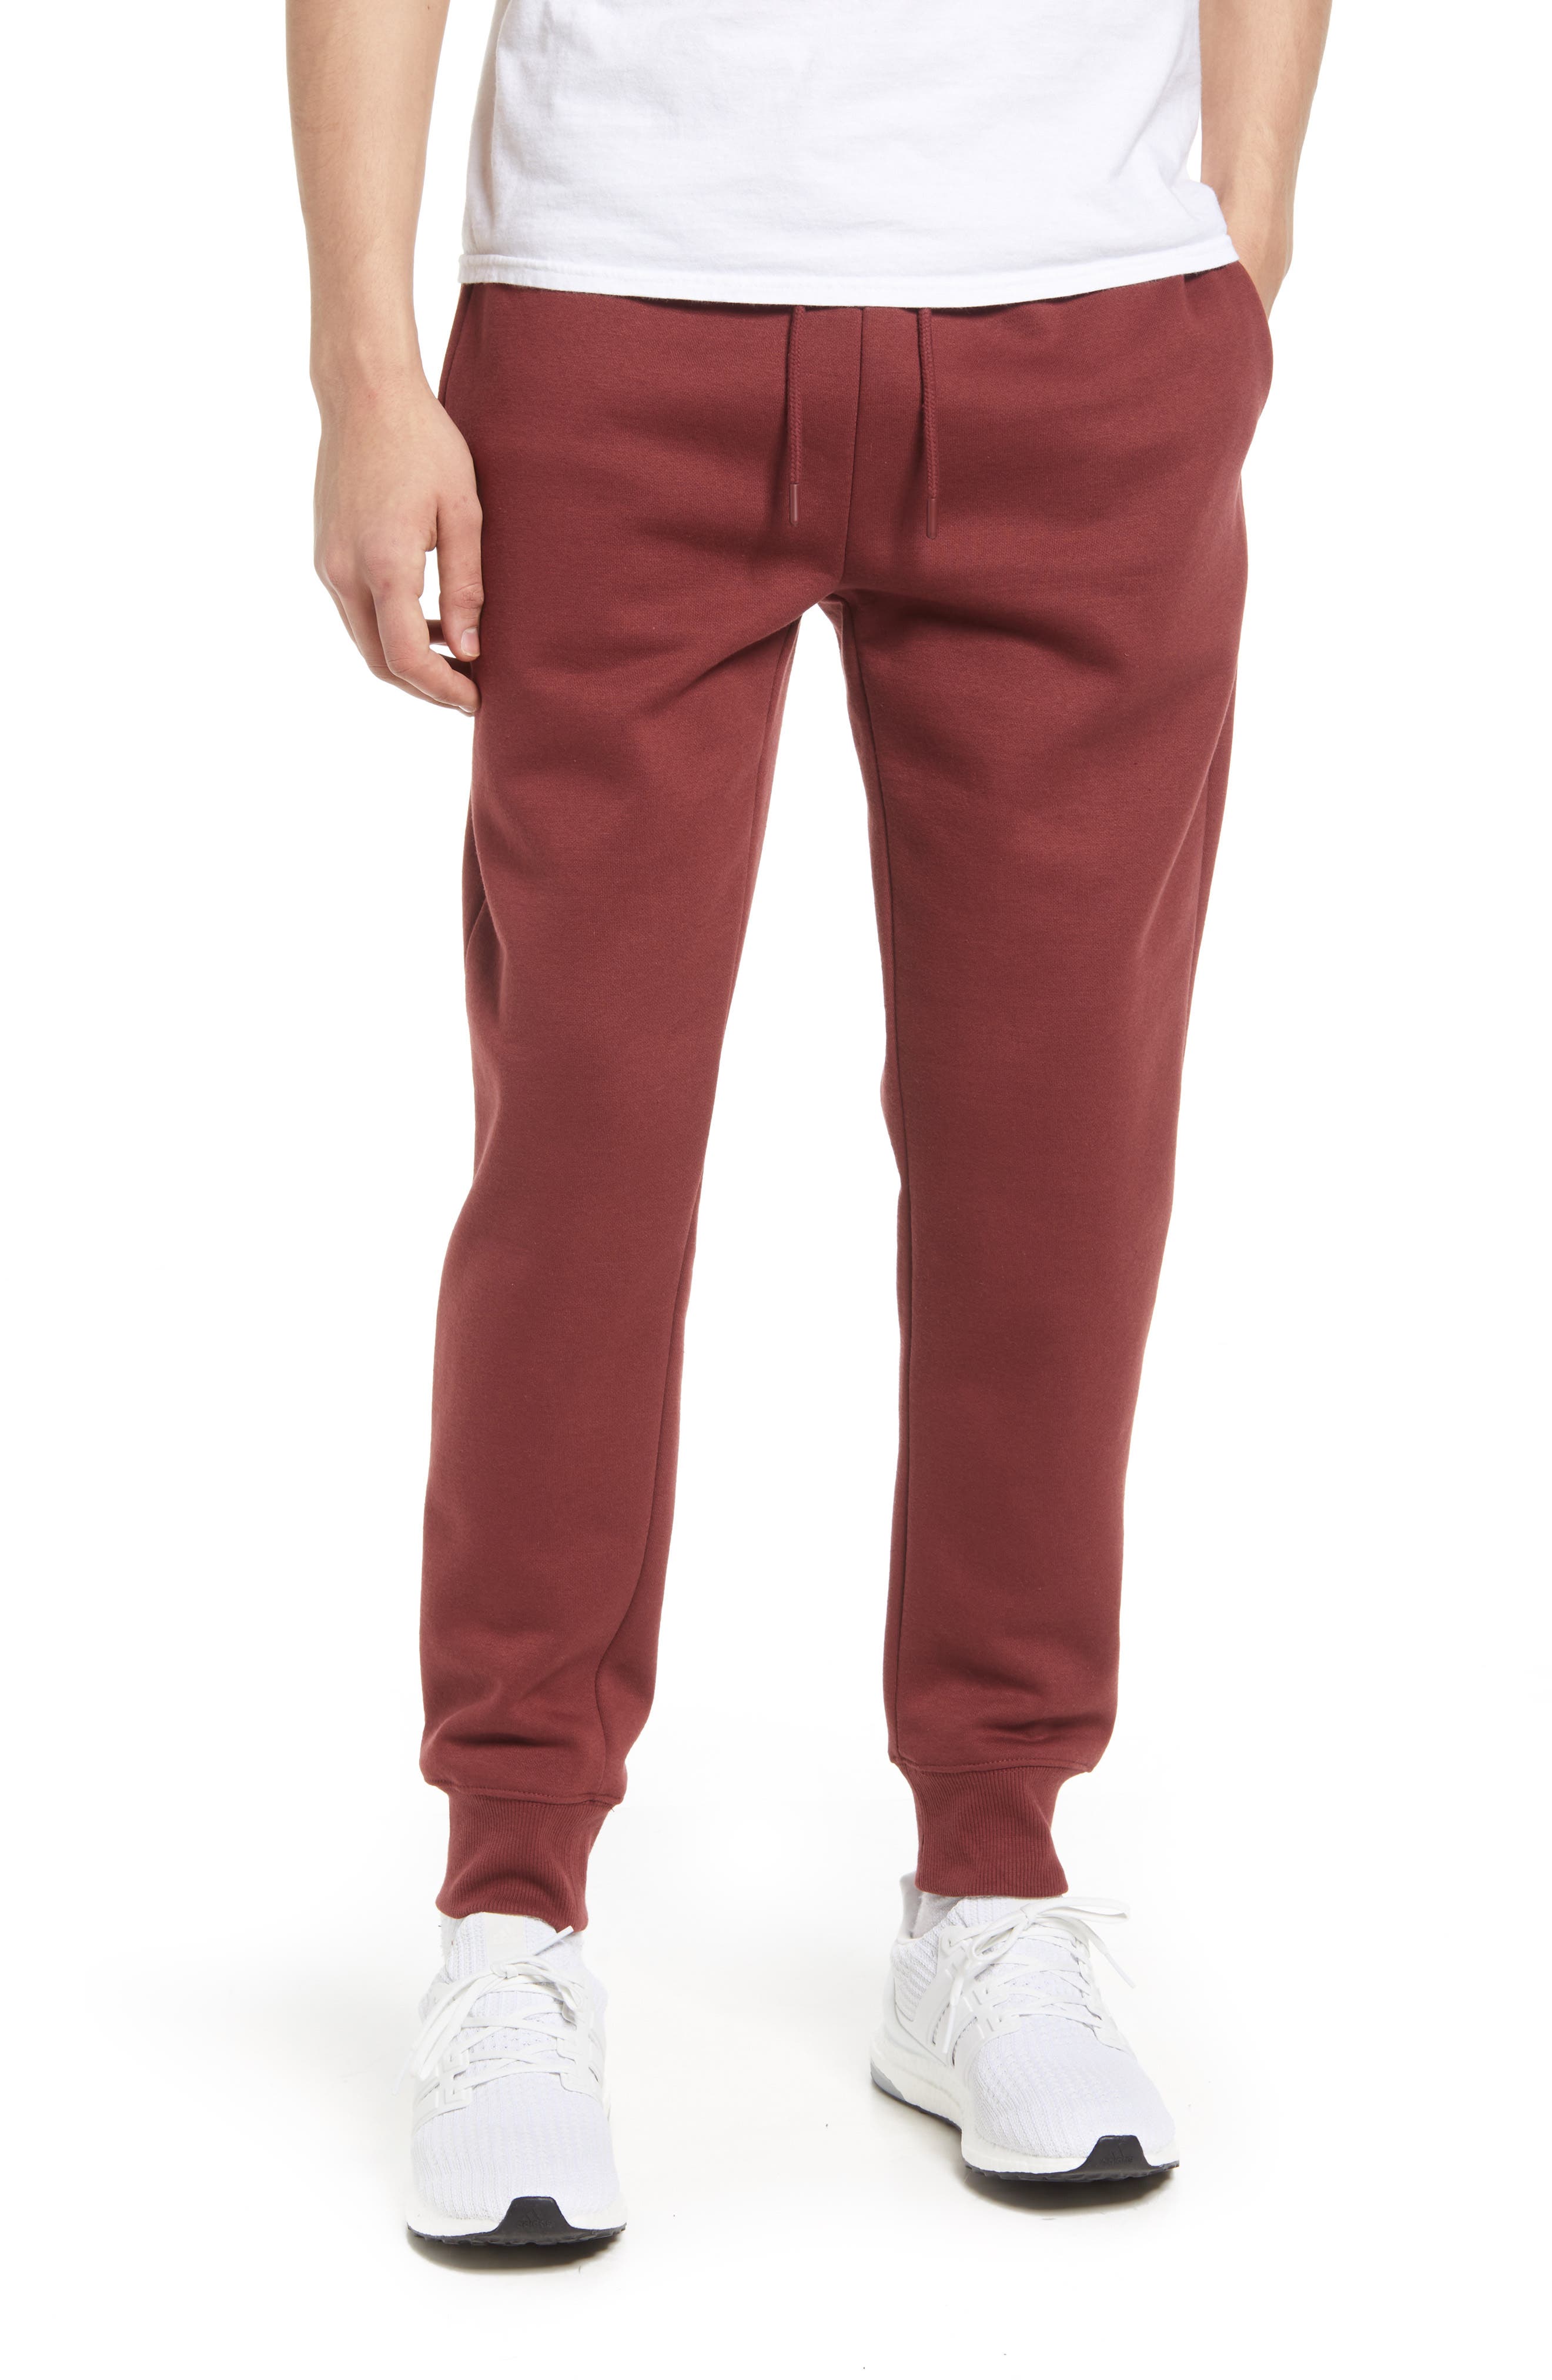 Topman Men's Skinny Cotton Blend Joggers in Red